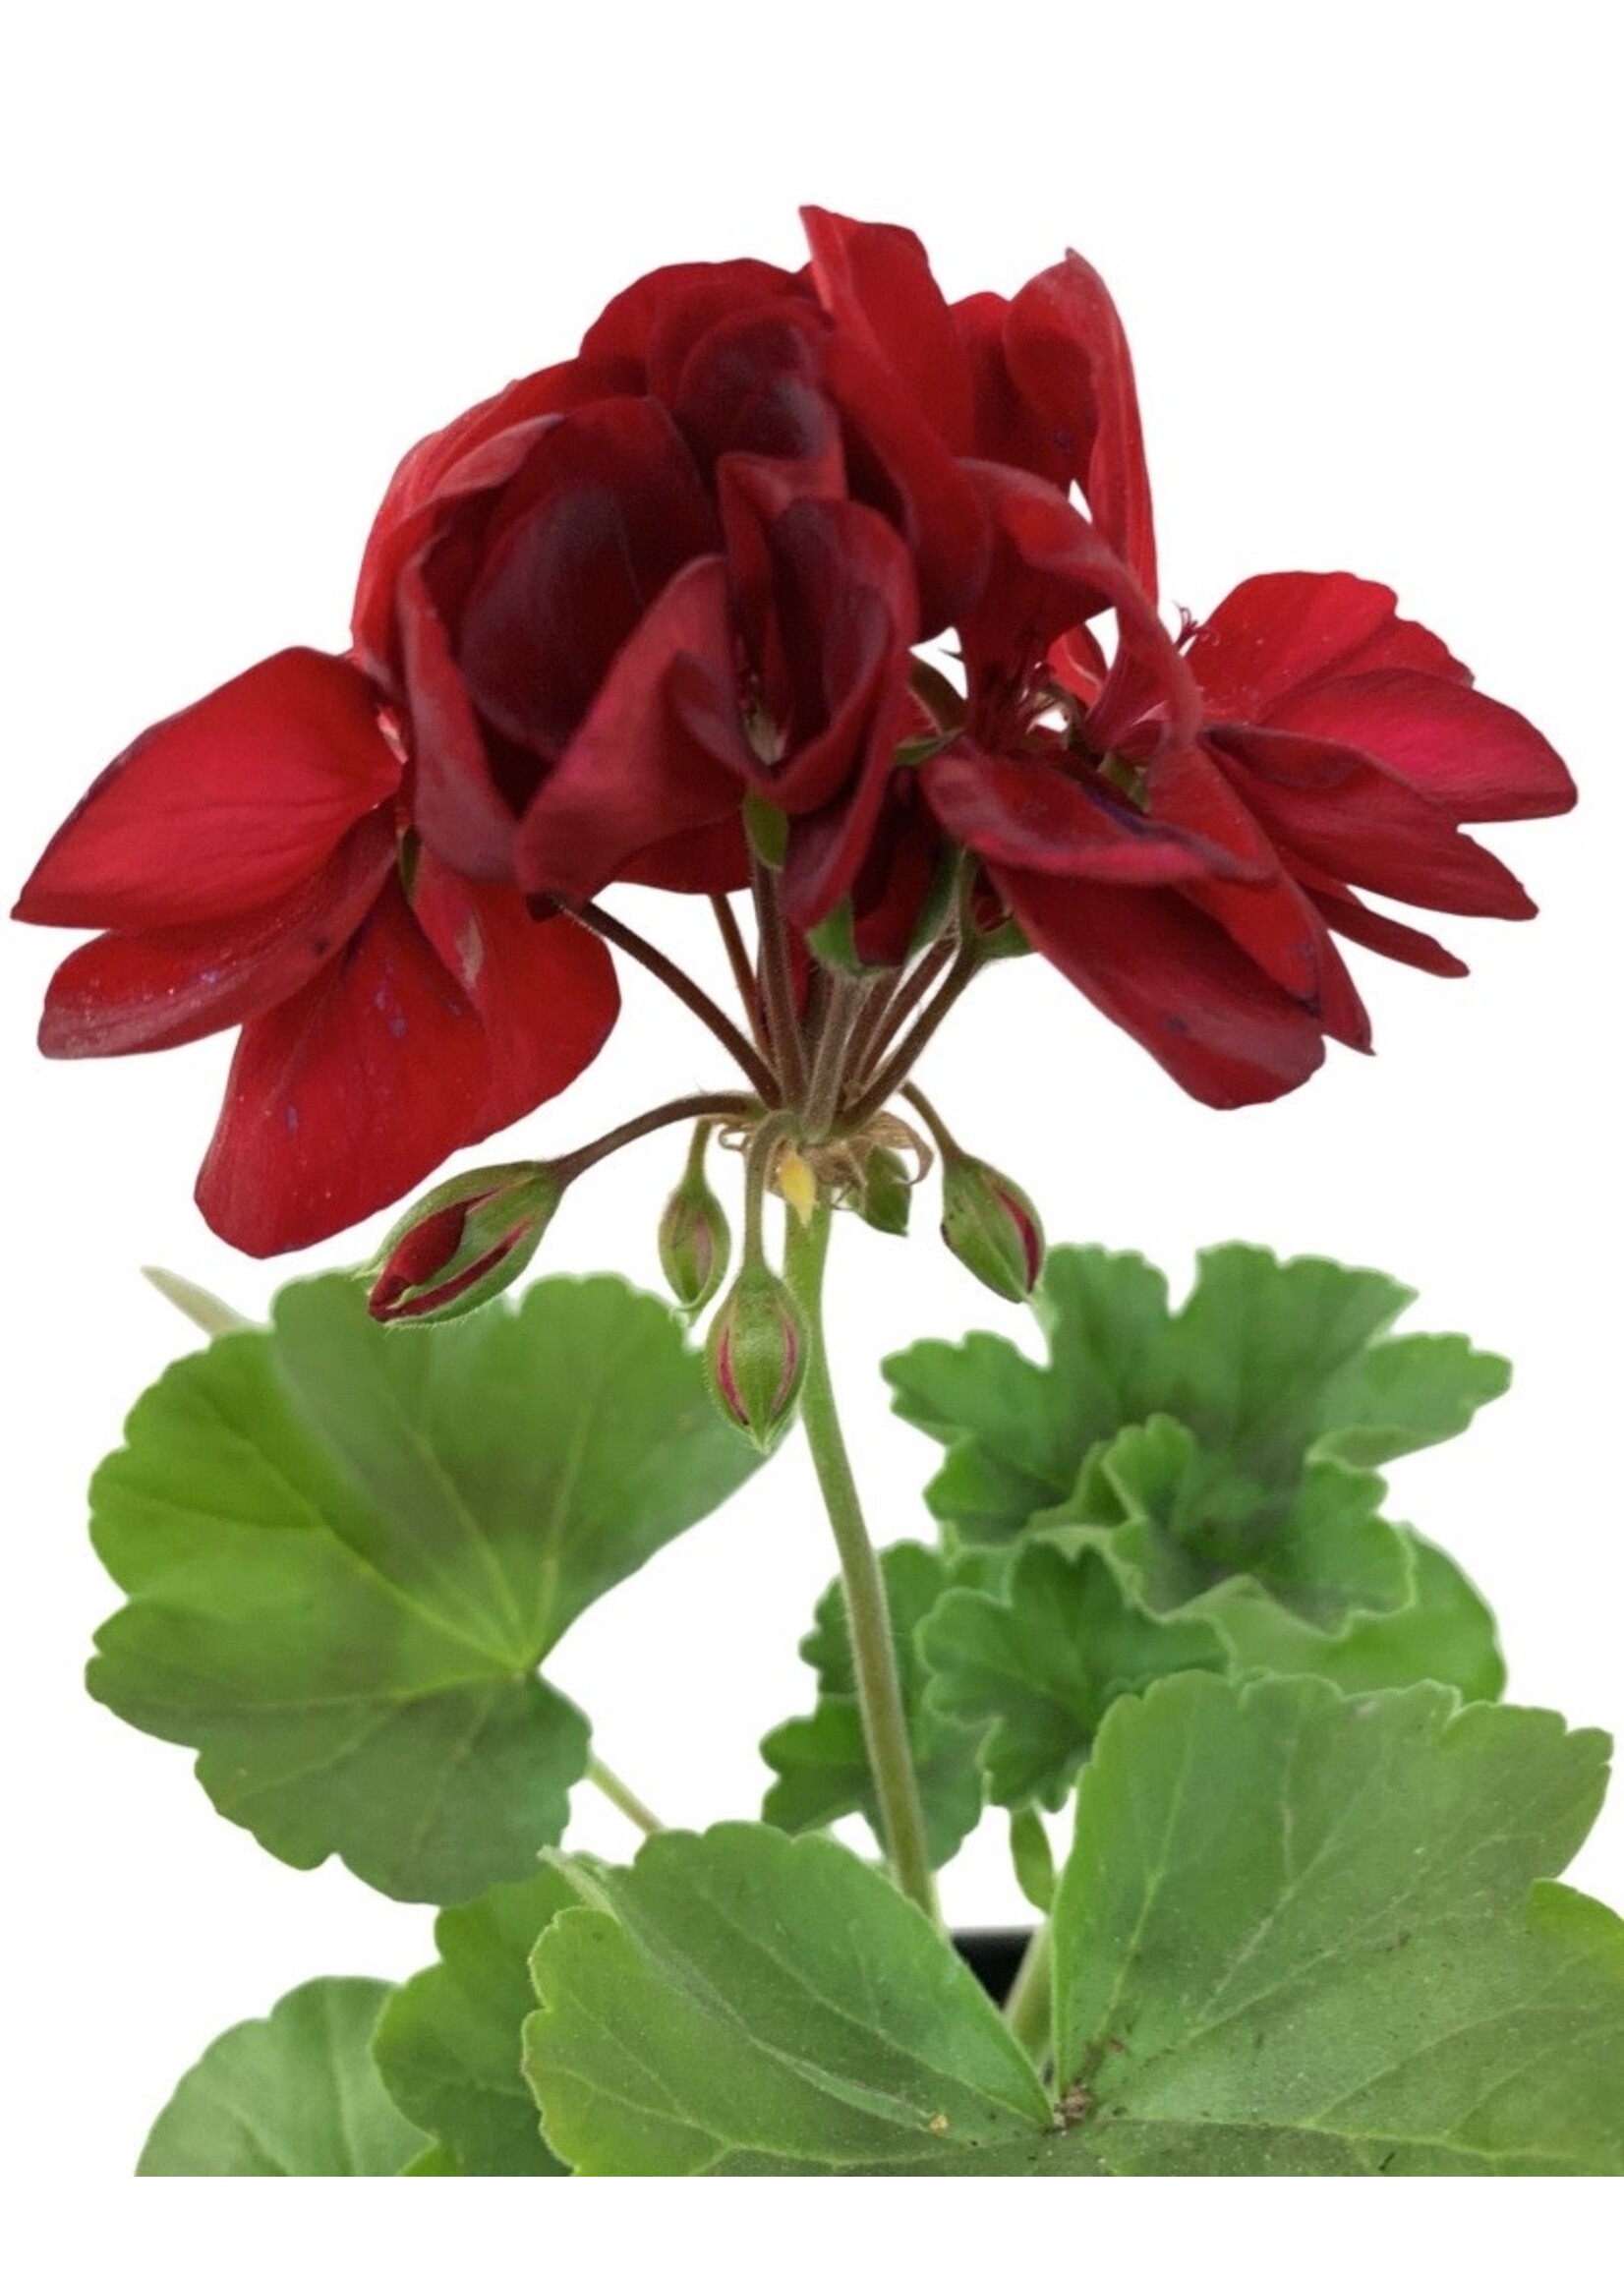 Geranium Zonal 'Calliope Dark Red' 4 inch